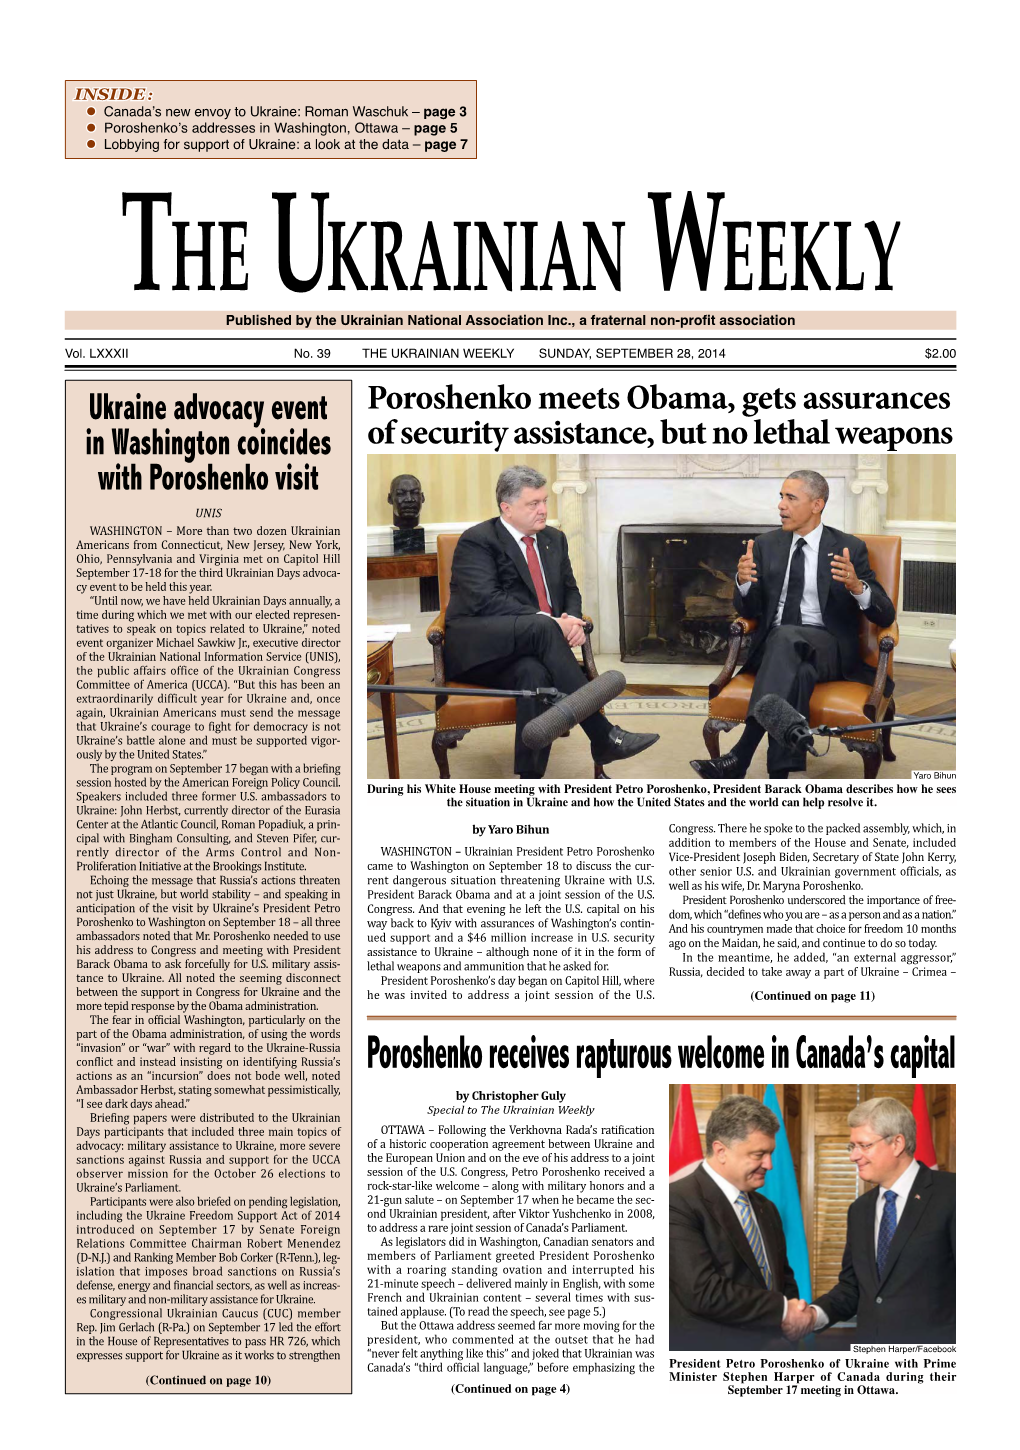 The Ukrainian Weekly 2014, No.39